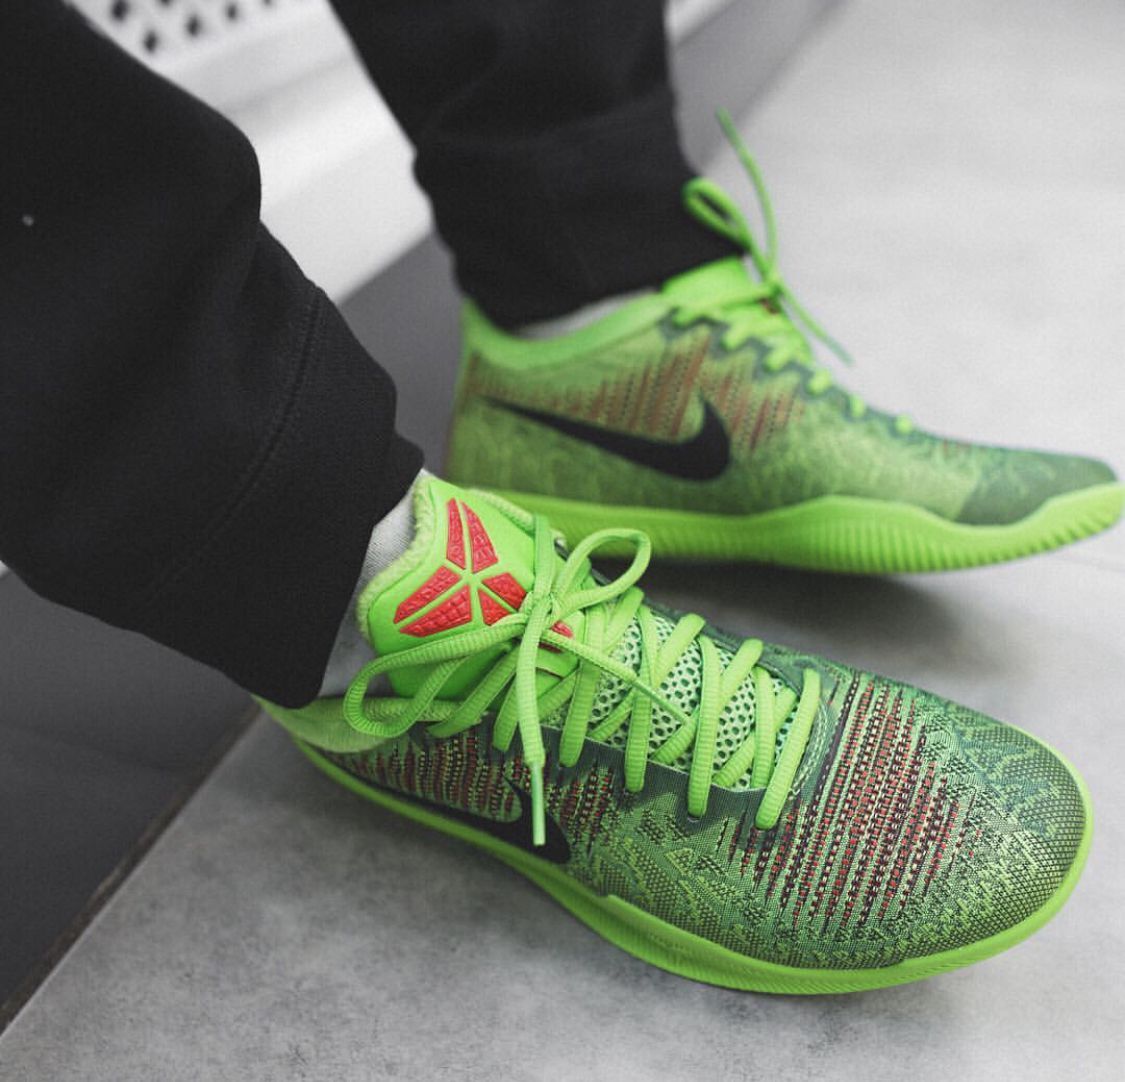 On Nike Kobe Mamba Rage "Grinch" — Sneaker Shouts